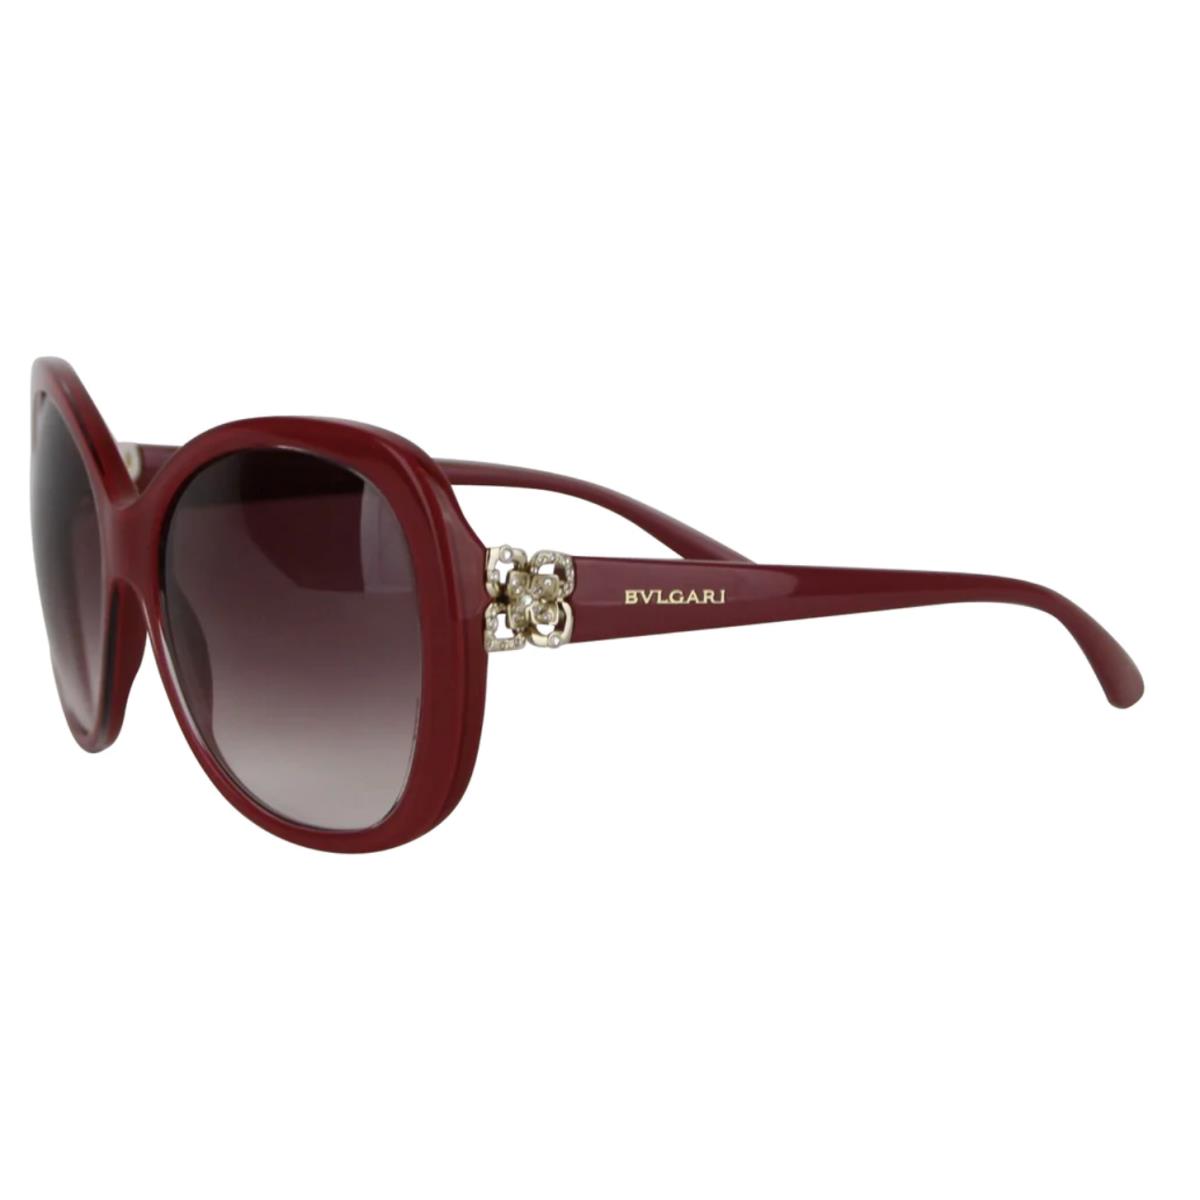 Bvlgari sunglasses  - Raspberry Frame, Violet Gradient Lens 1